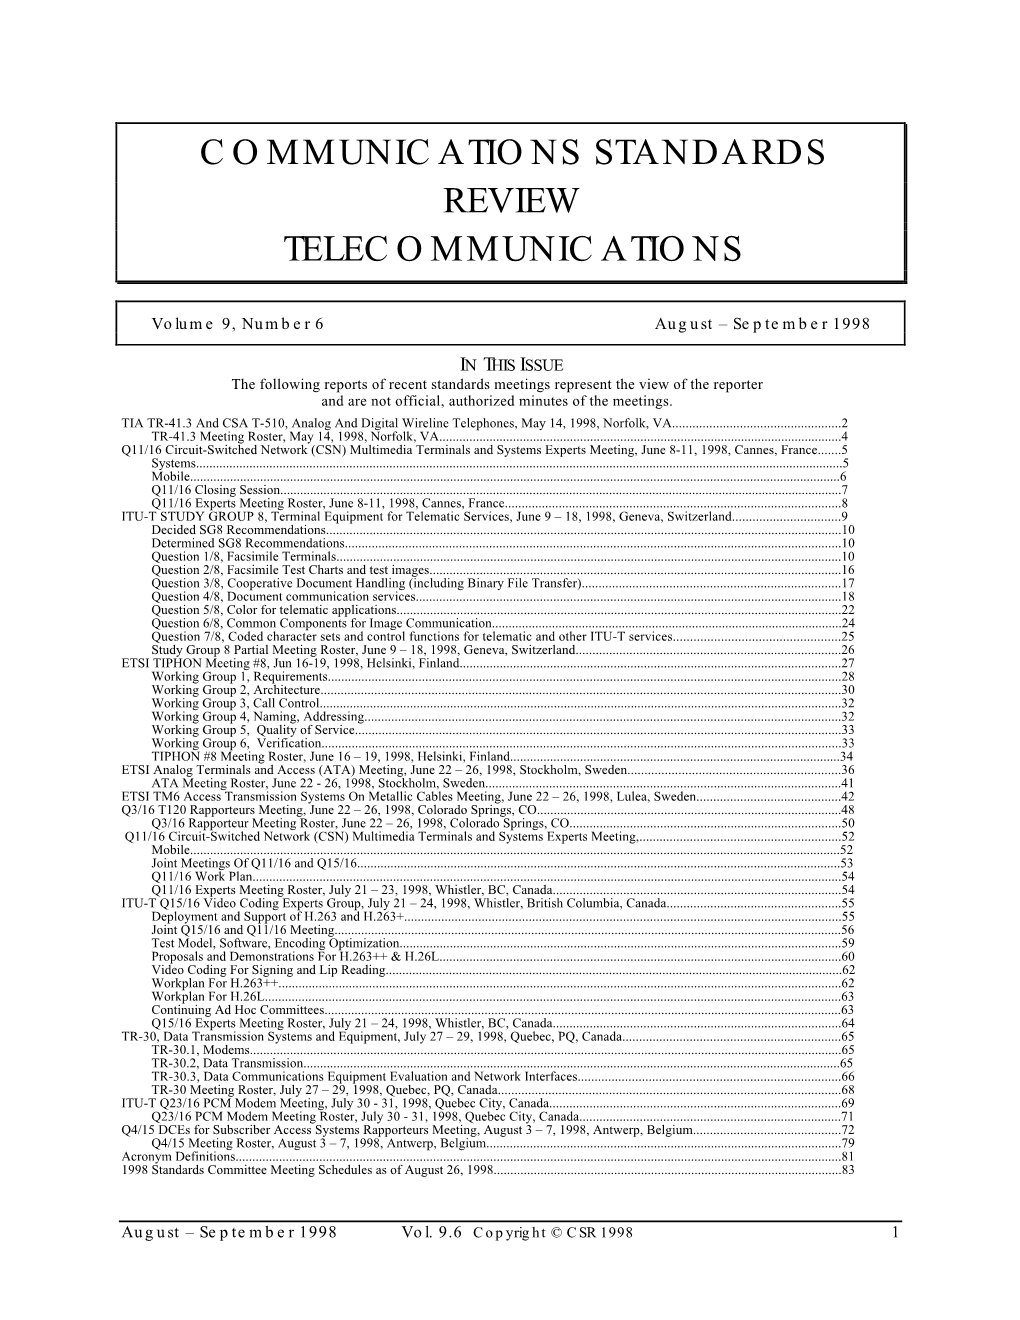 Communications Standards Review Telecommunications